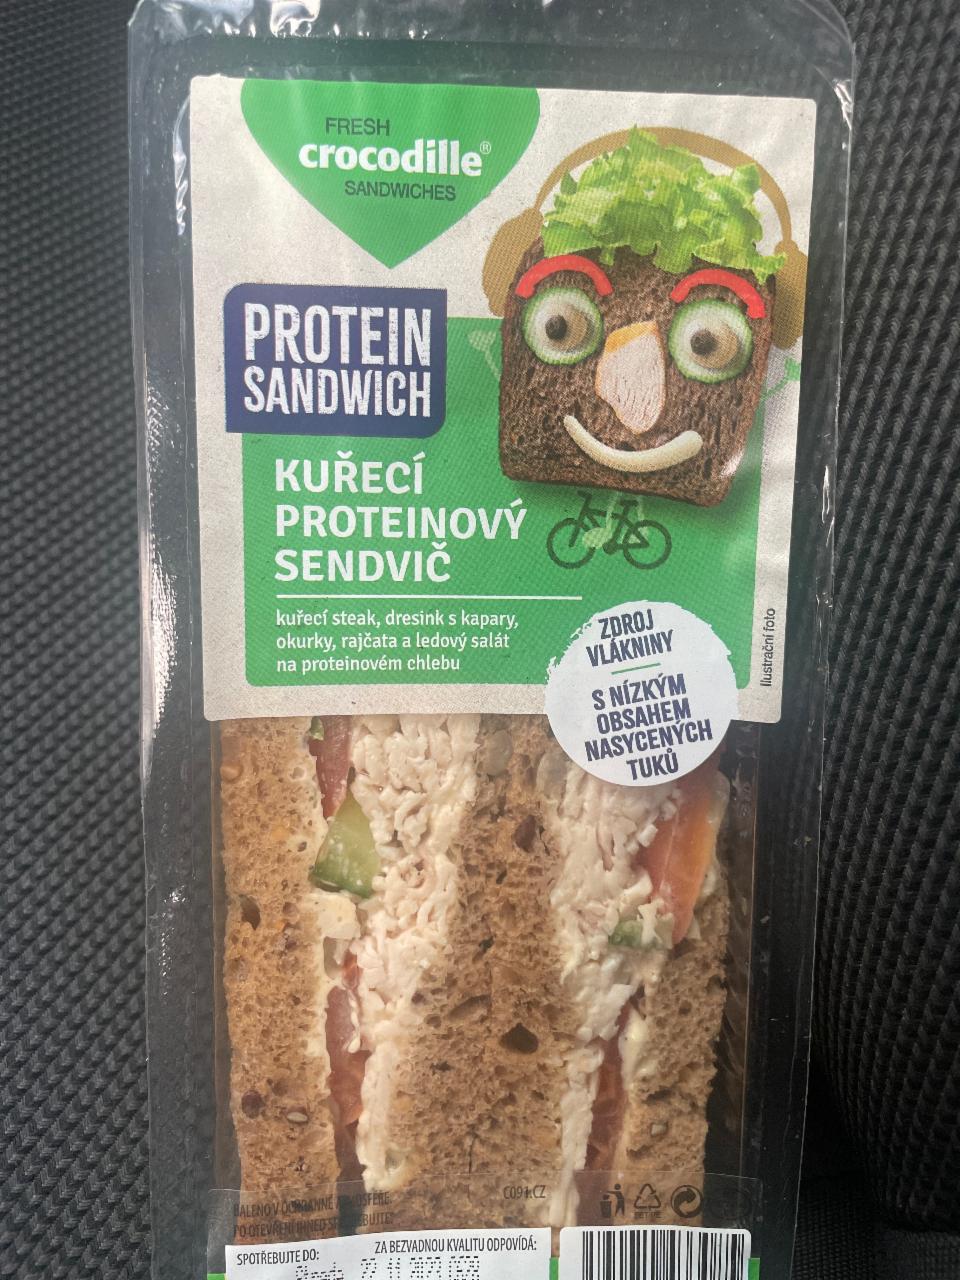 Fotografie - Protein Sandwich Kuřecí proteinový sendvič Fresh crocodille